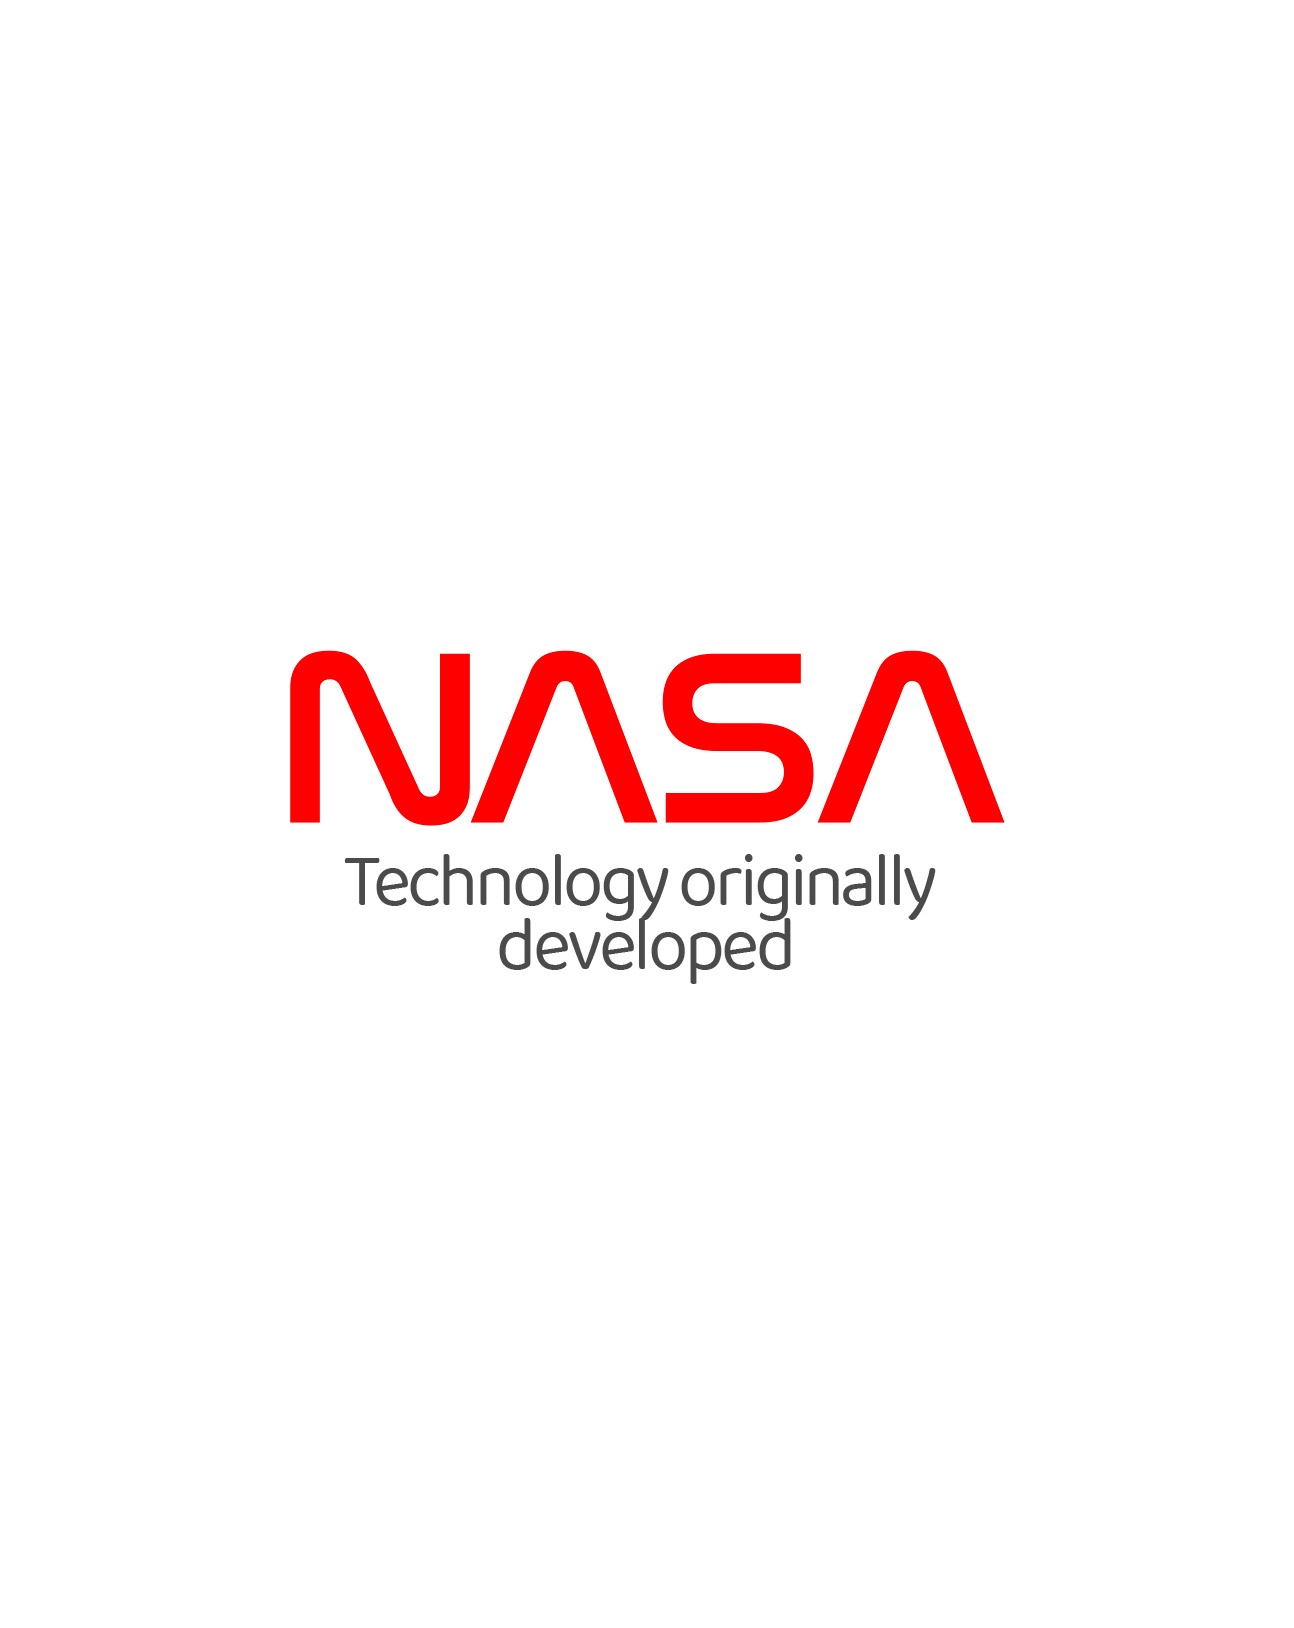 Nasa Developed technology